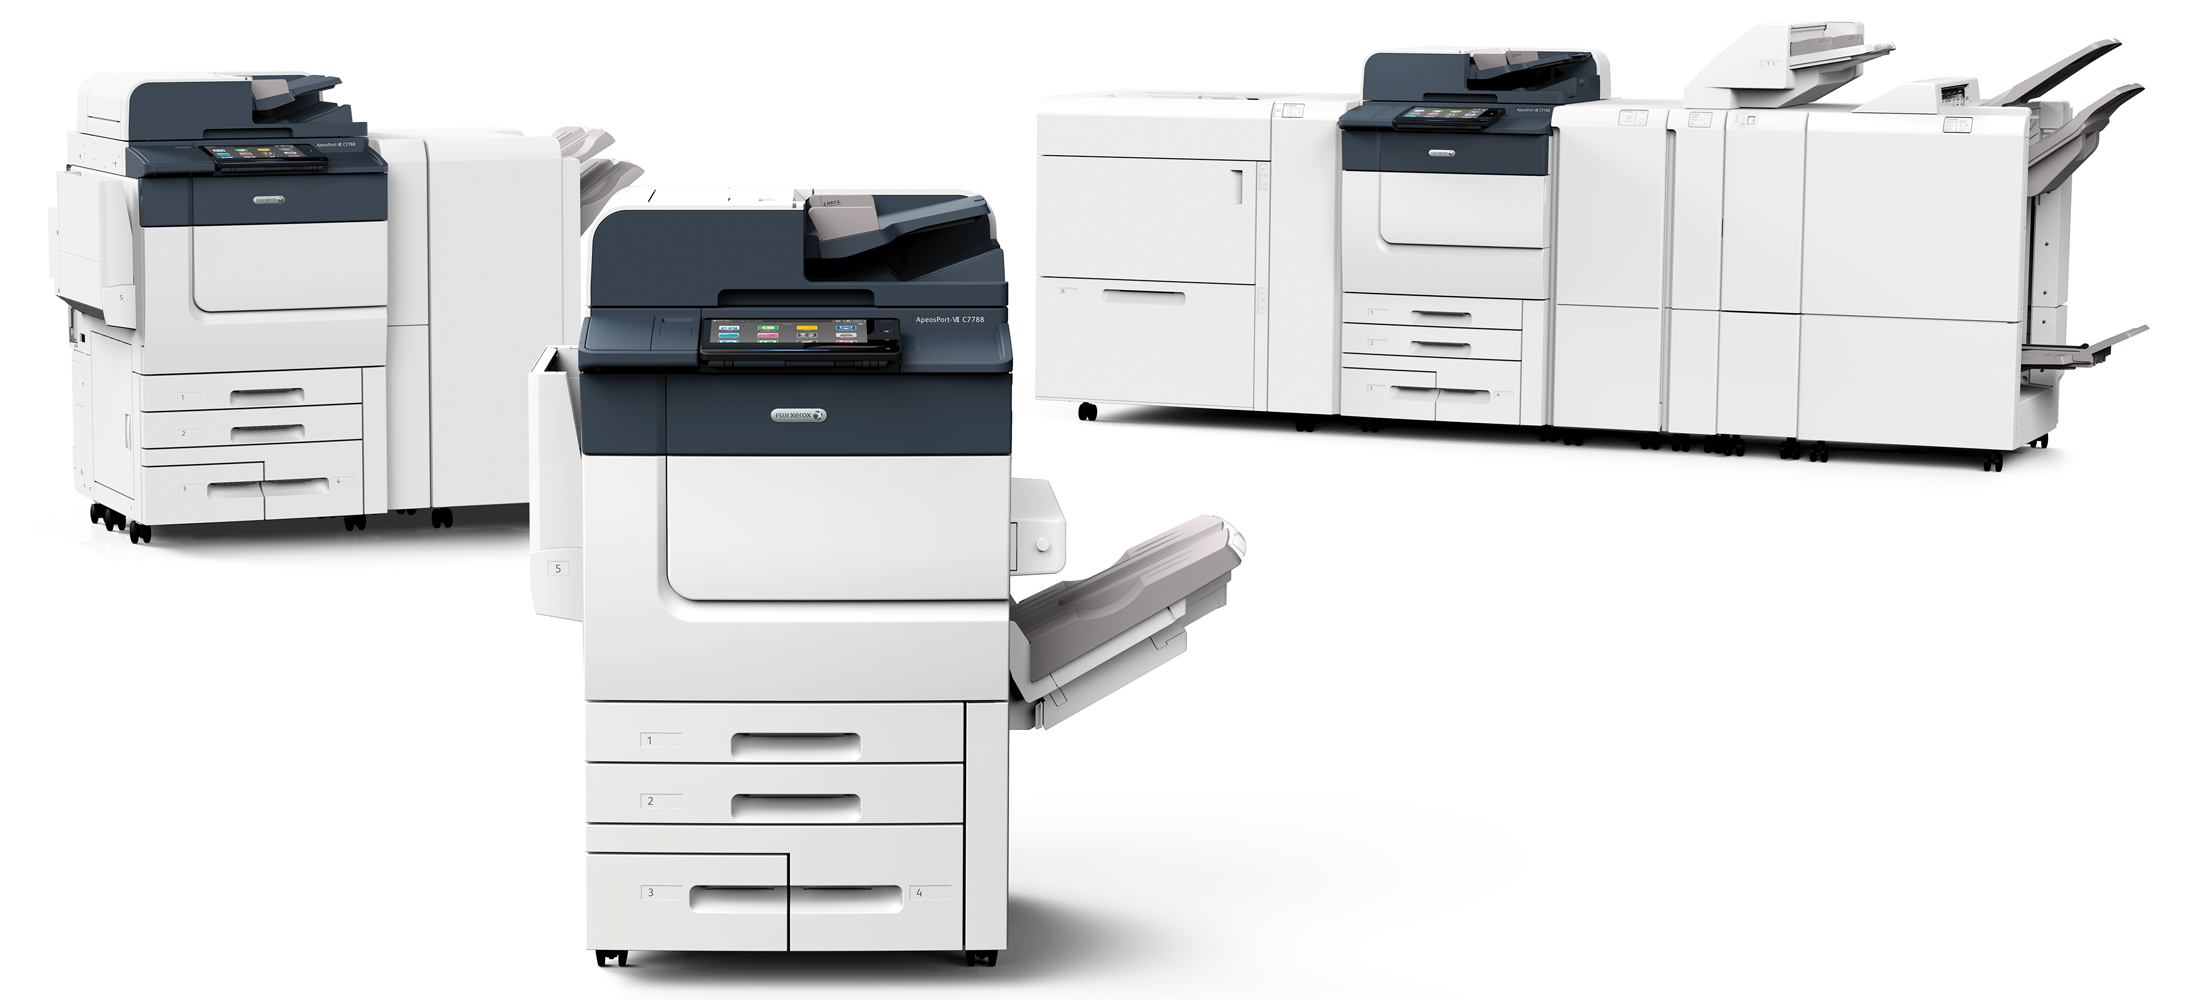 ApeosPort-VII C7788 / C6688 / C5588 High-speed Color Multifunction A3 Printer